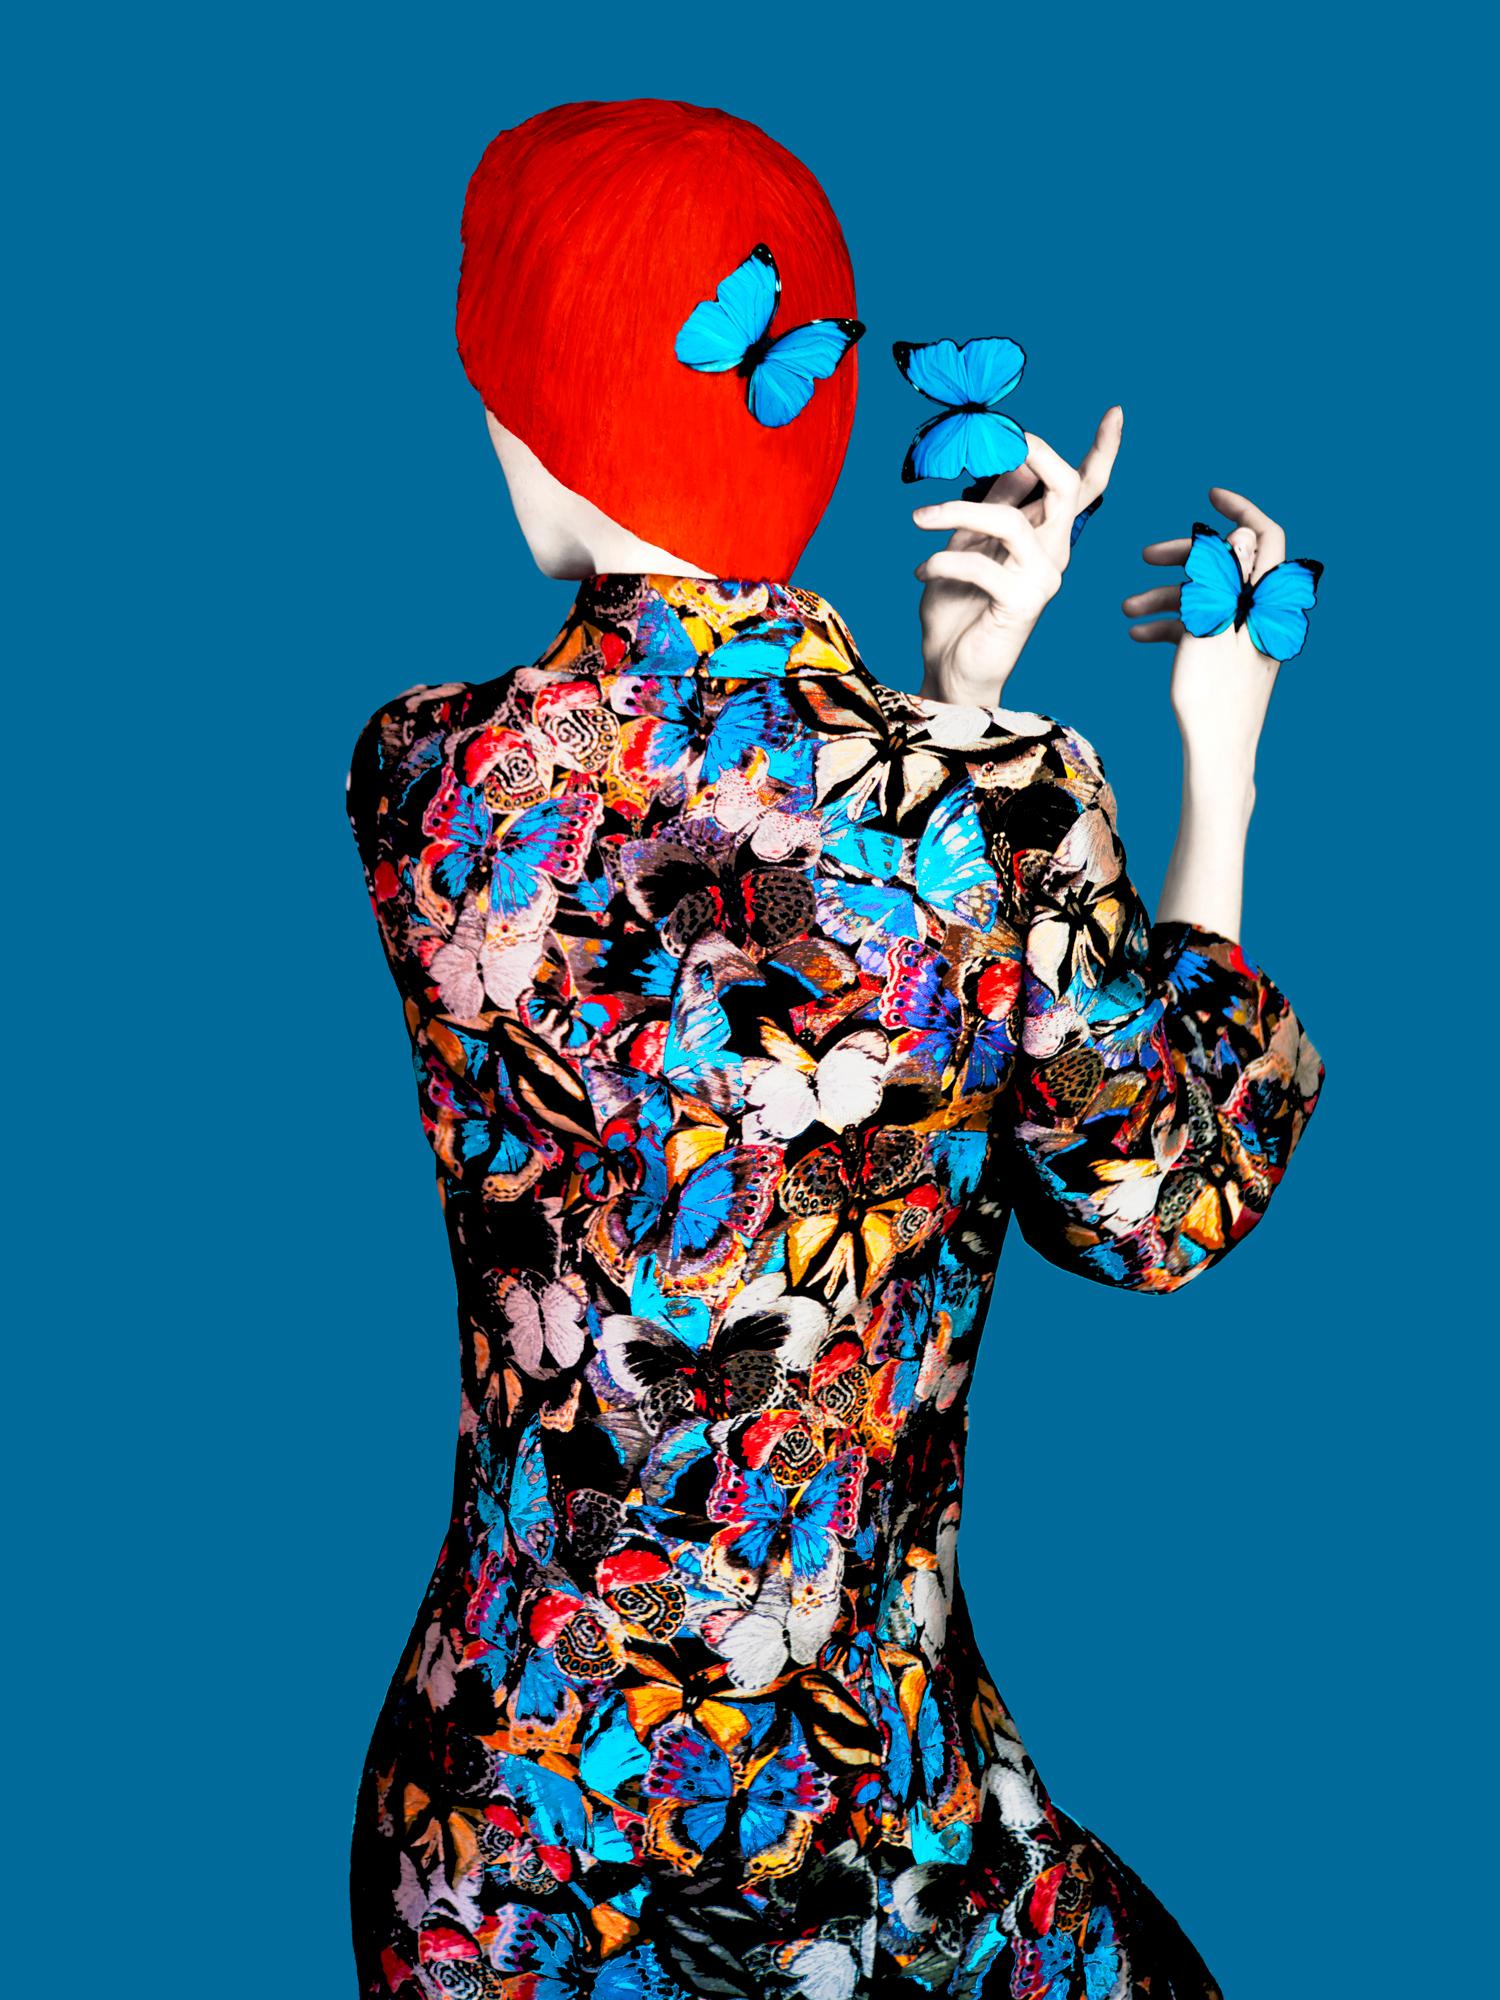 Color Photograph Erik Madigan Heck - Sans un visage (Valentino), Vieux avenir 